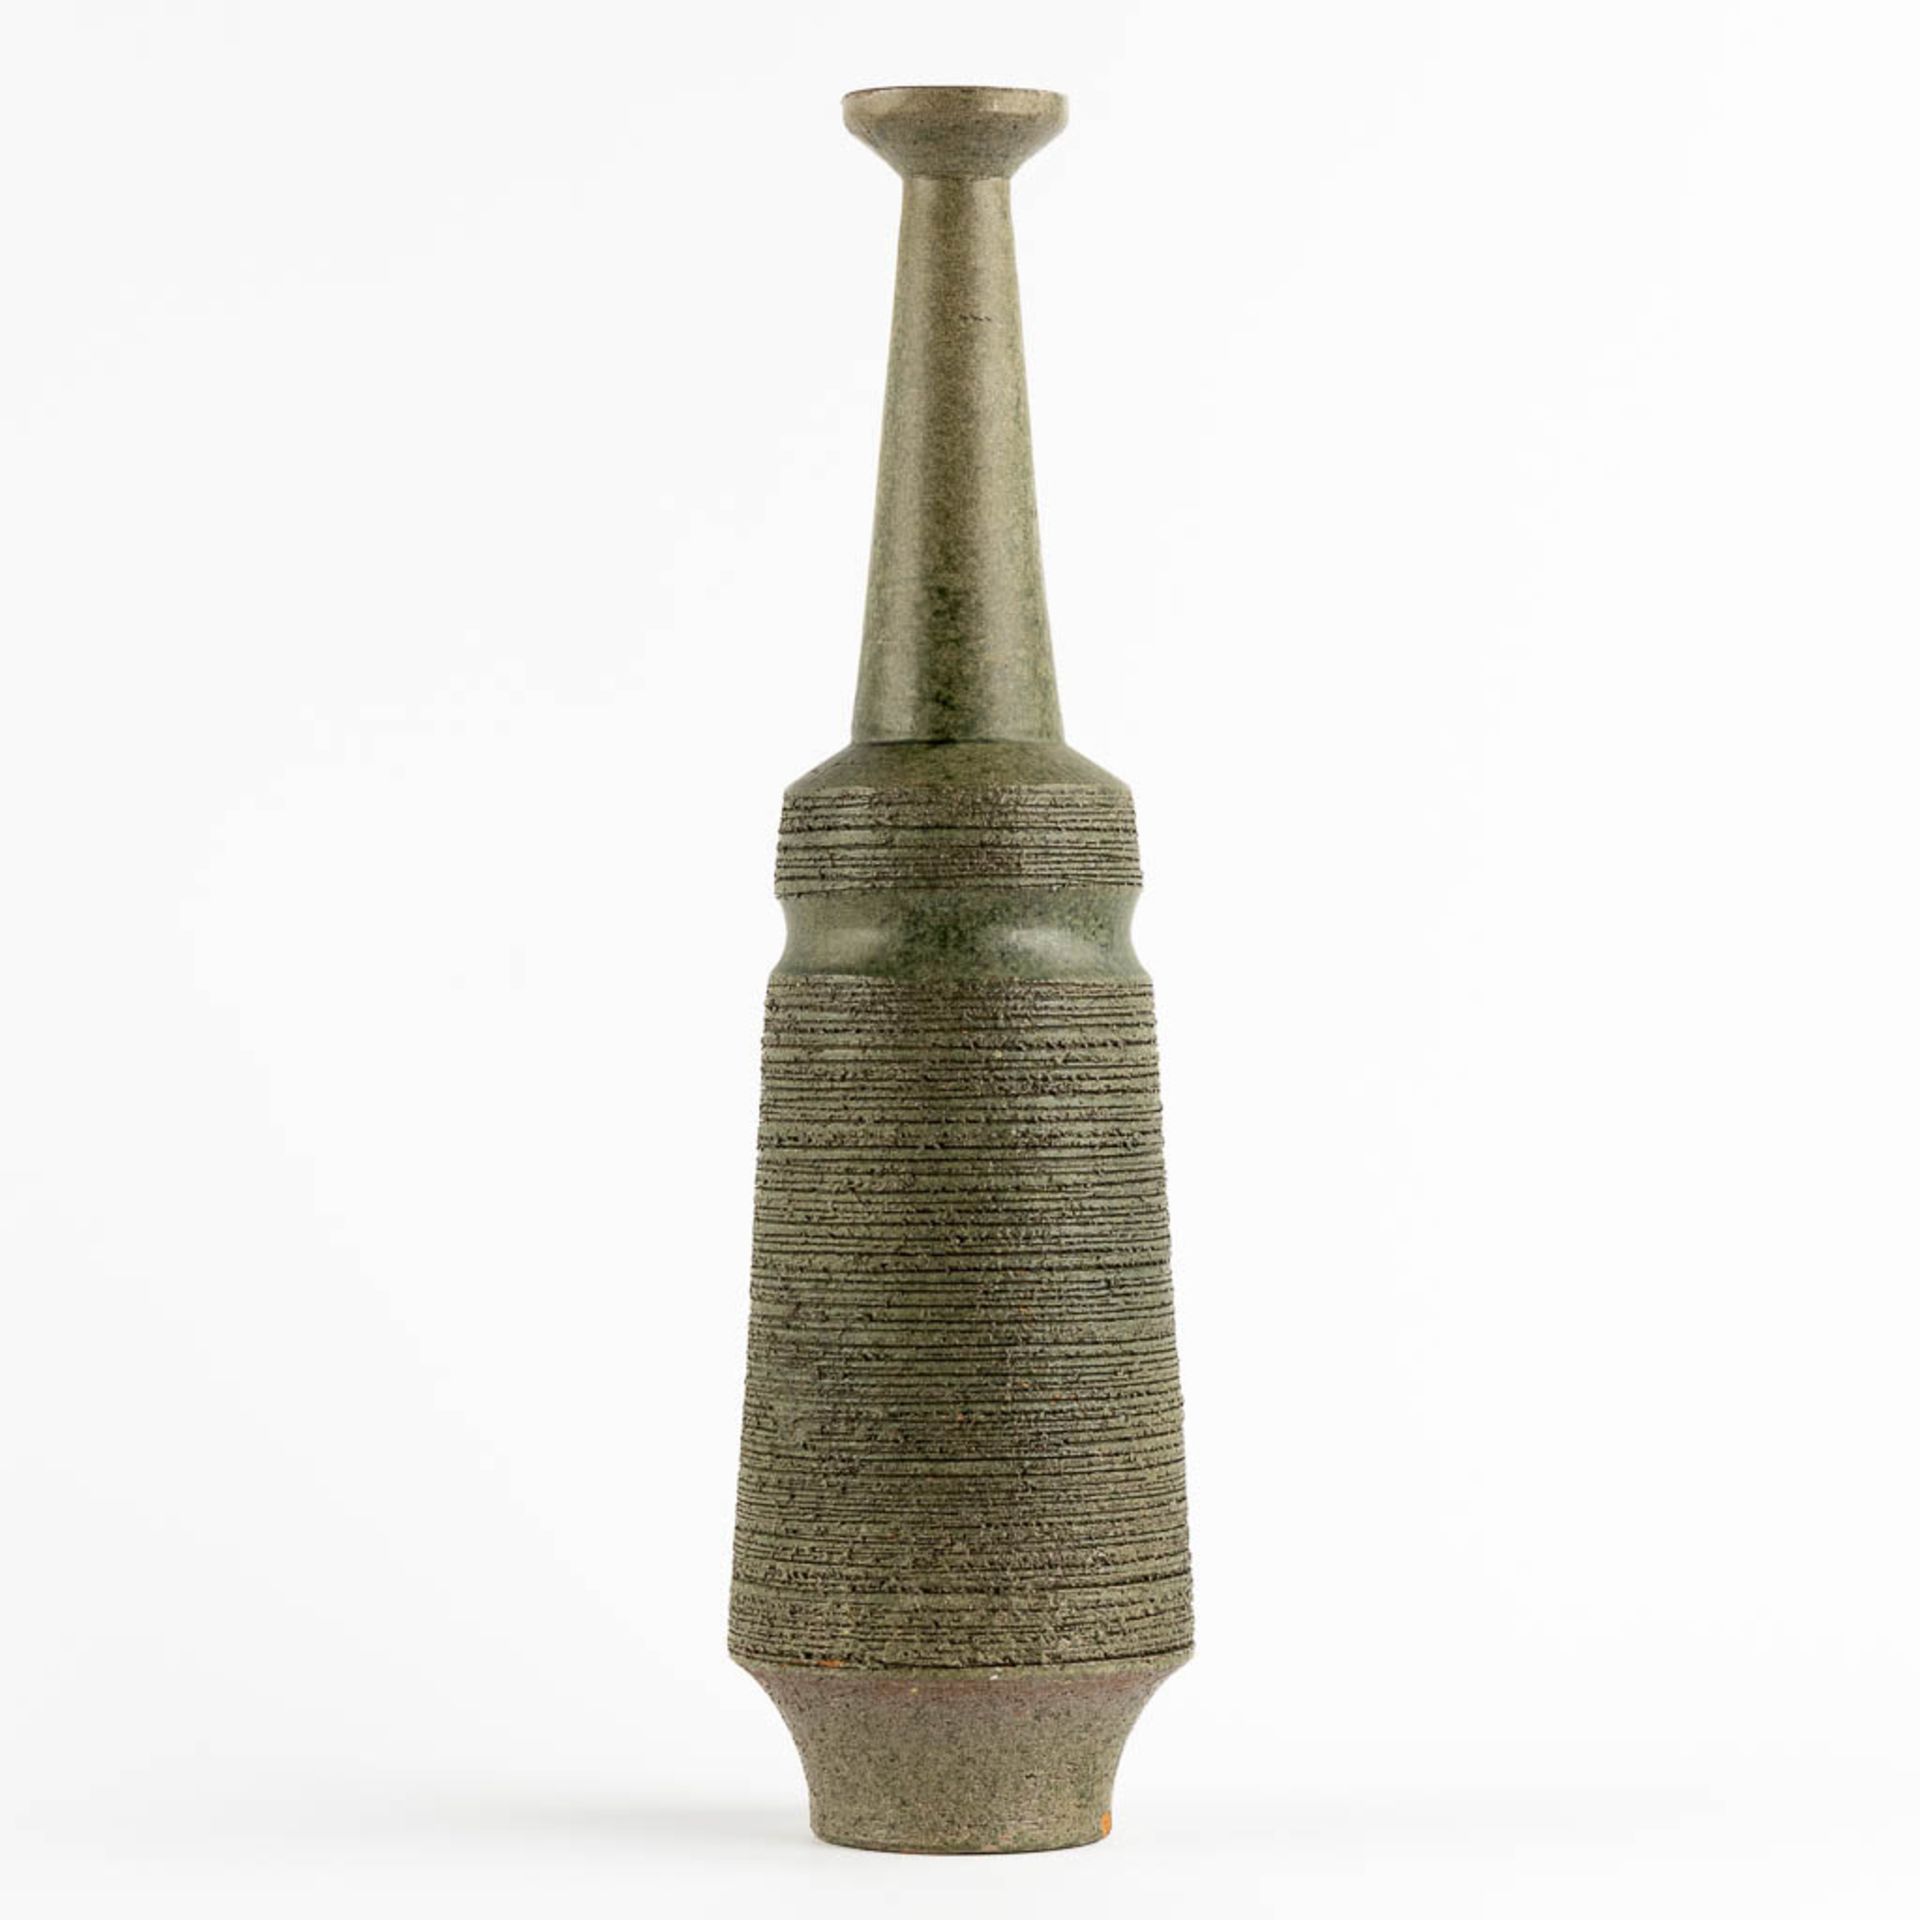 Amphora or Keramar, a large green vase, glazed ceramics. (H:53 x D:14 cm) - Bild 5 aus 10